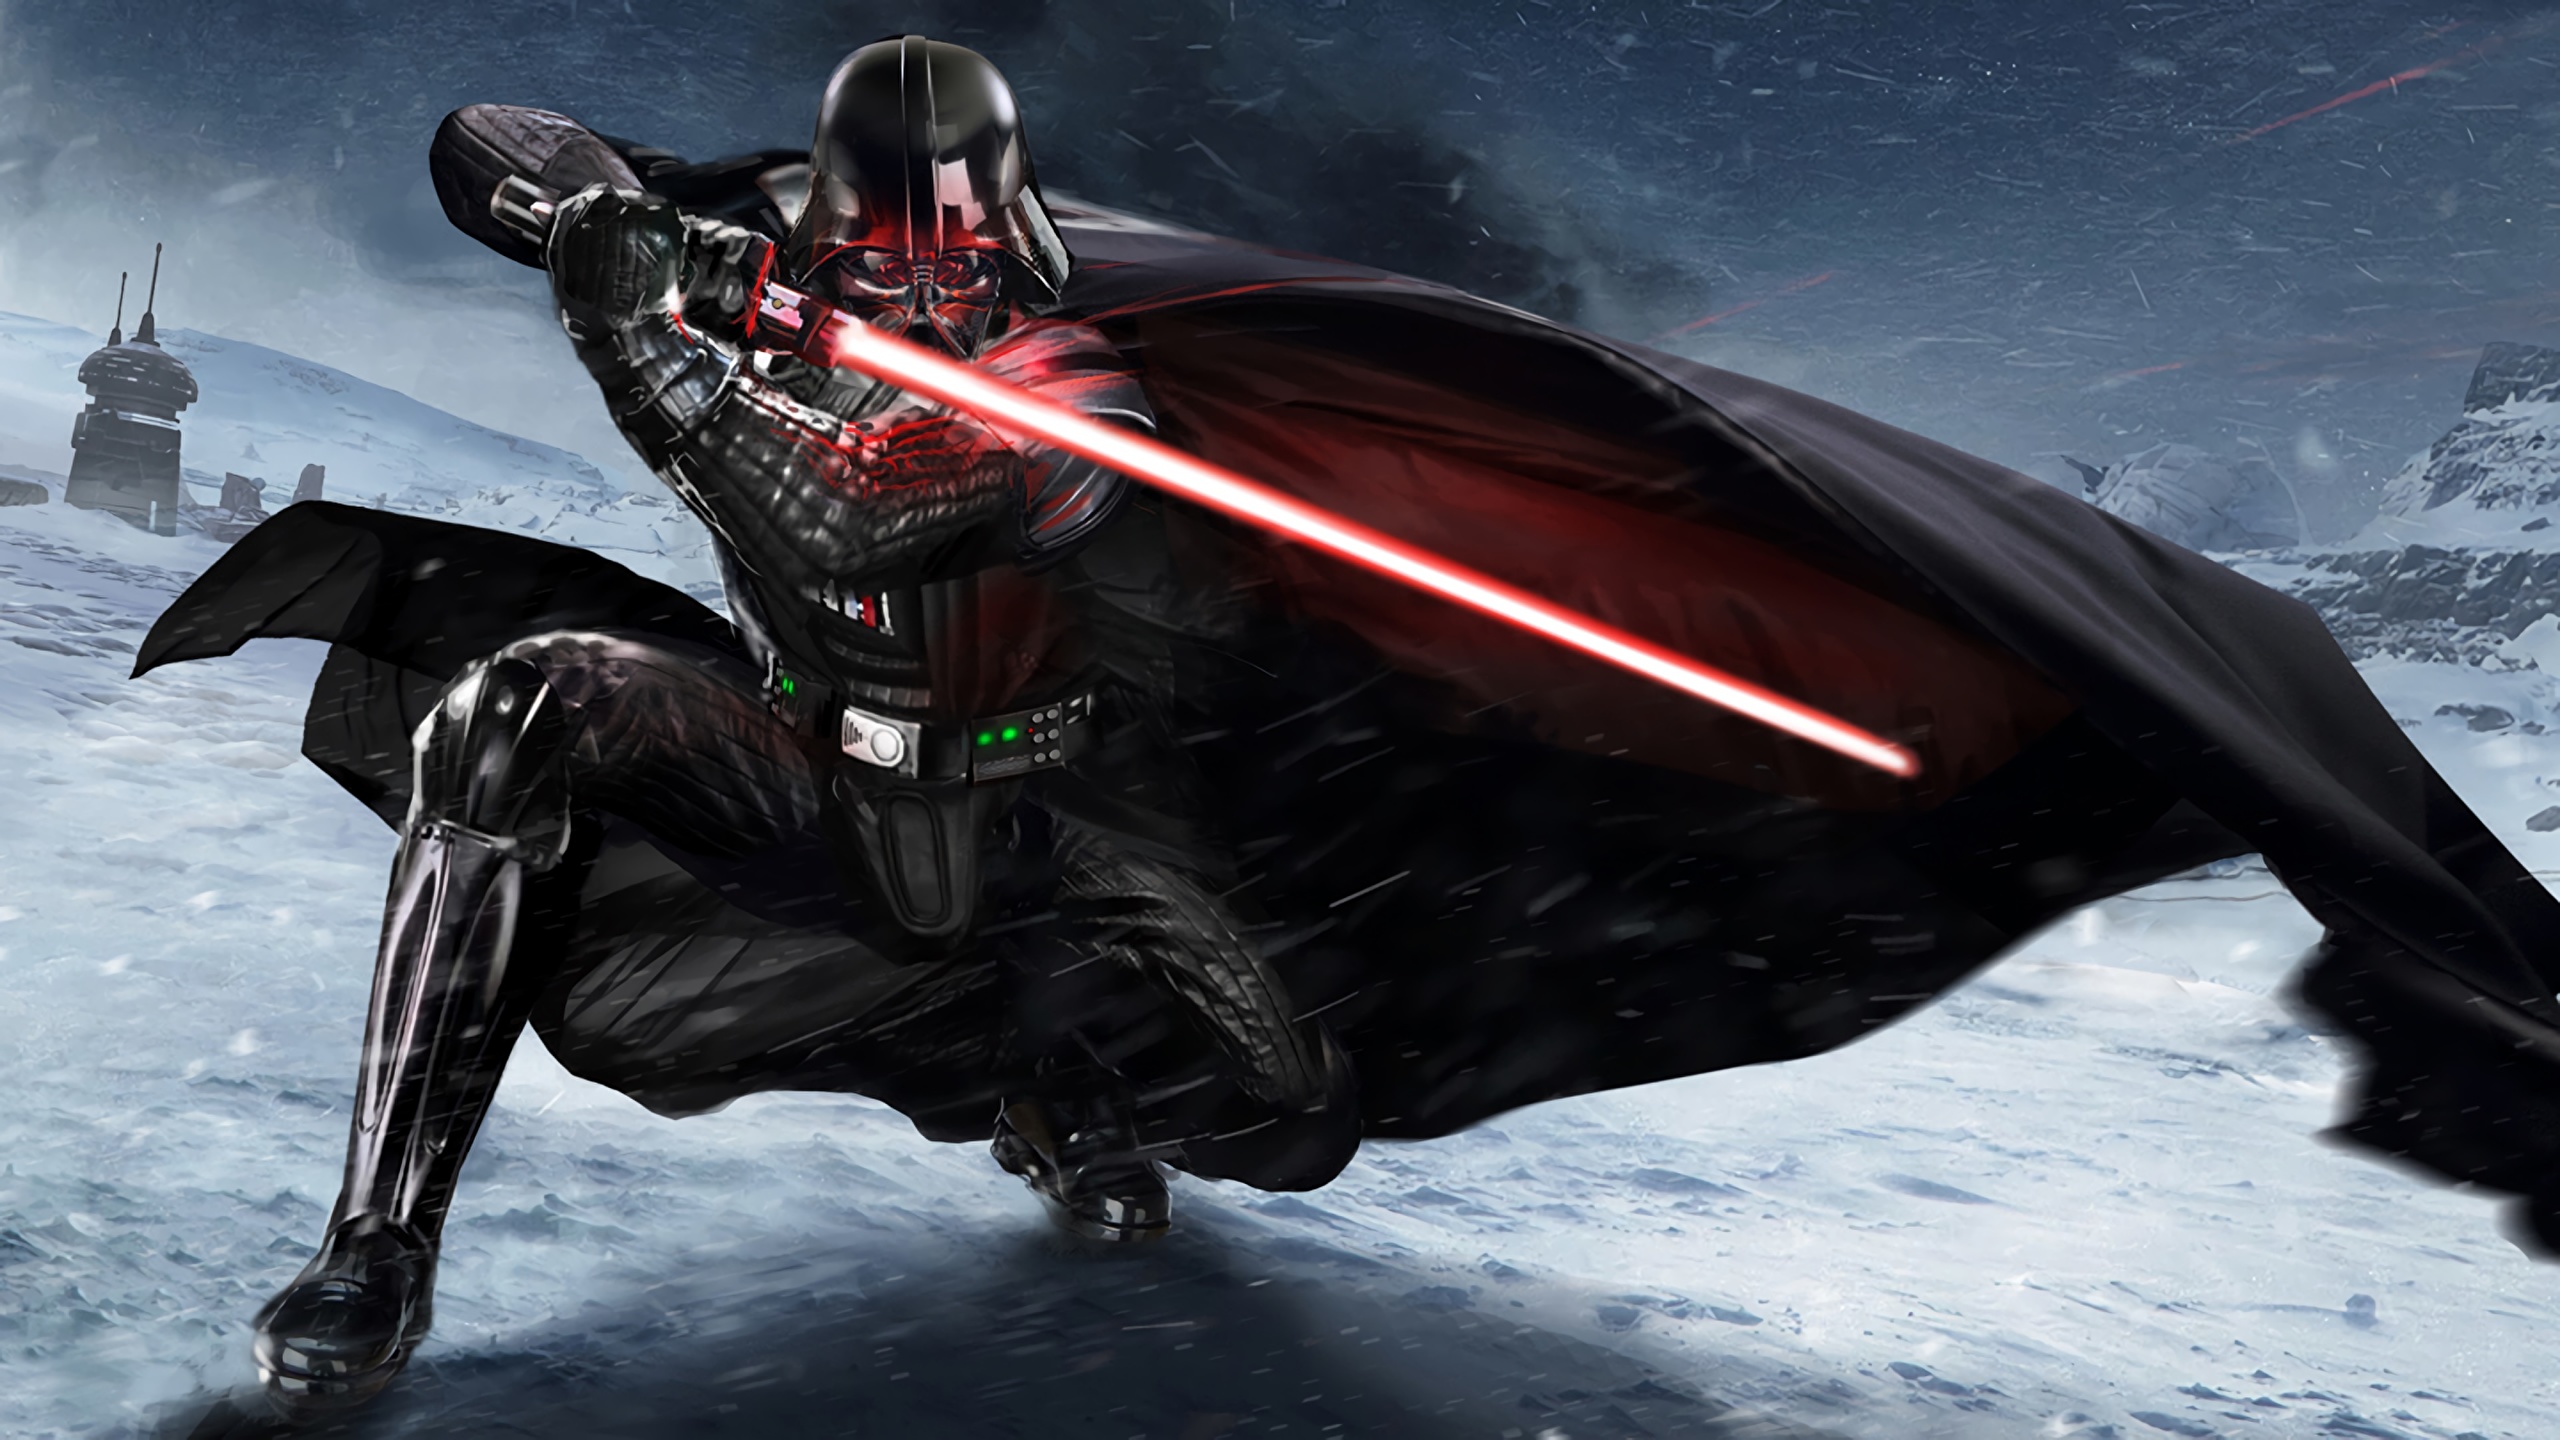 Wallpaper Darth Vader Star Wars - Movies Swords armour 2560x1440